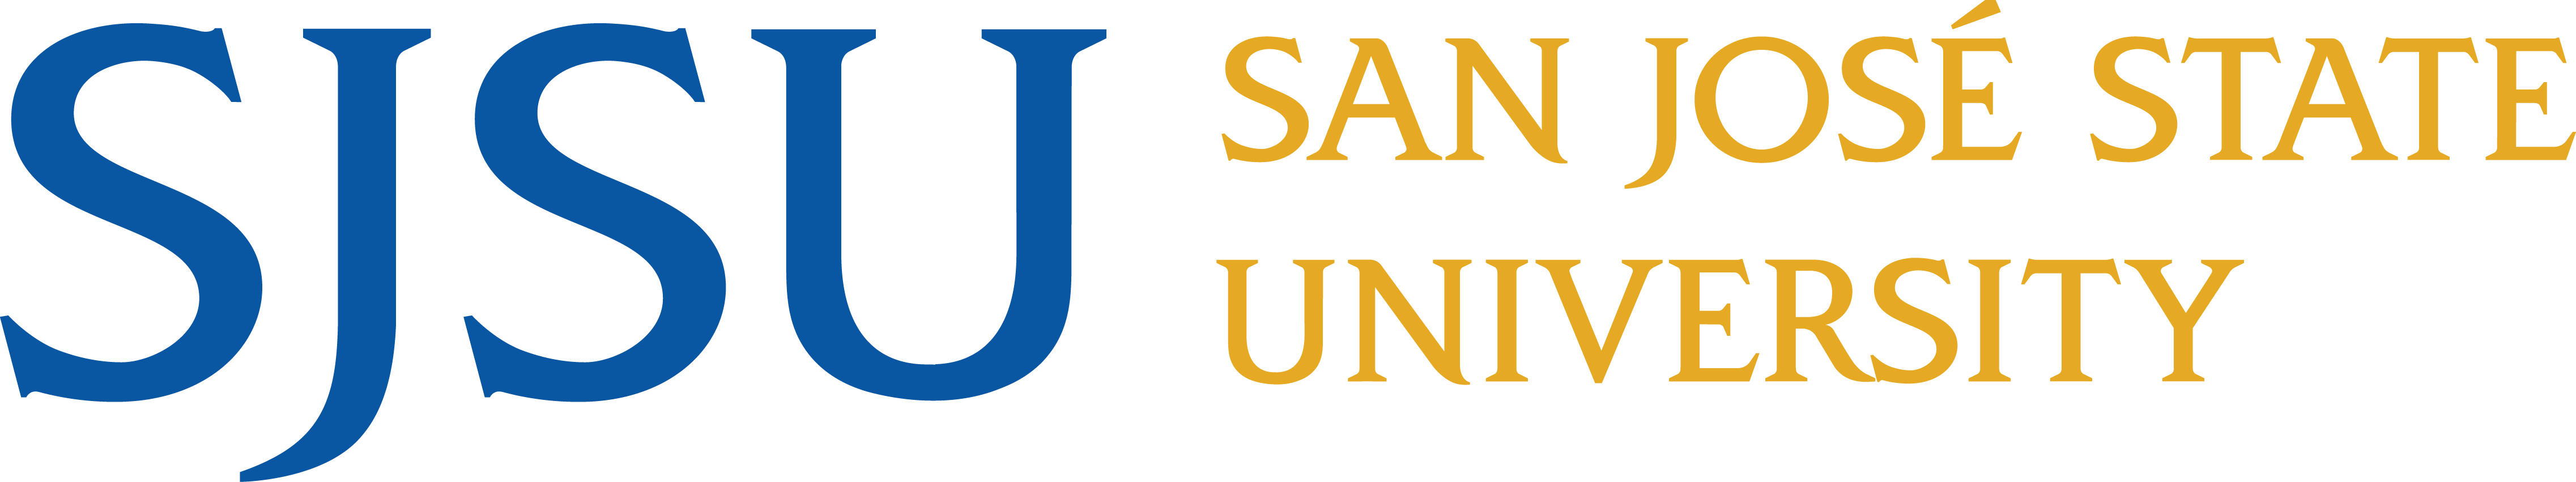 Sponsored by San Jose State University